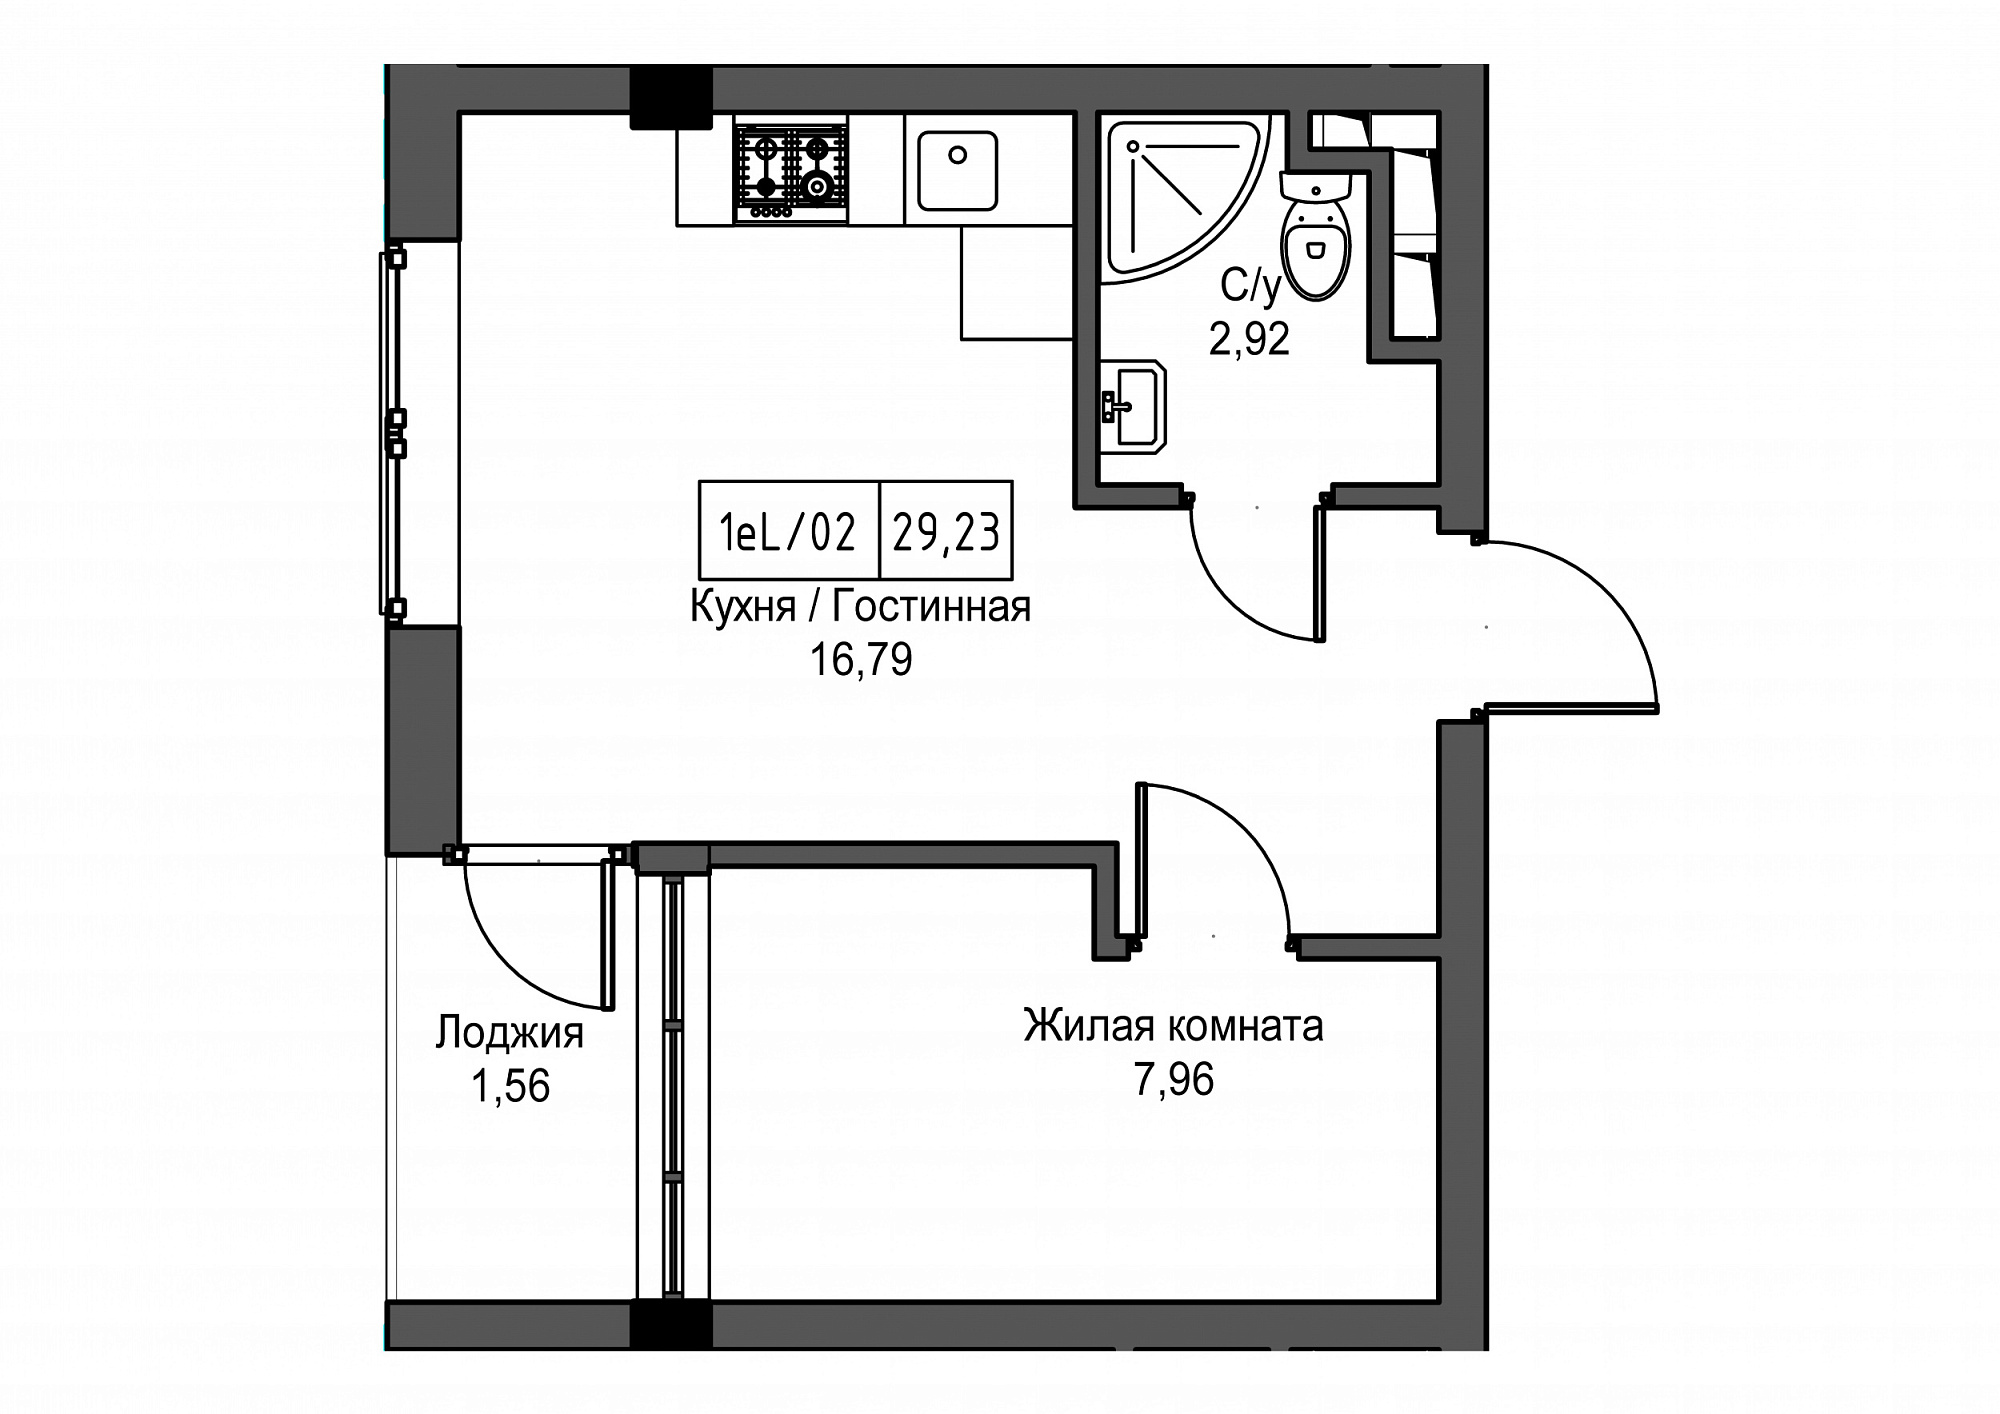 Planning 1-rm flats area 29.23m2, UM-002-02/0098.